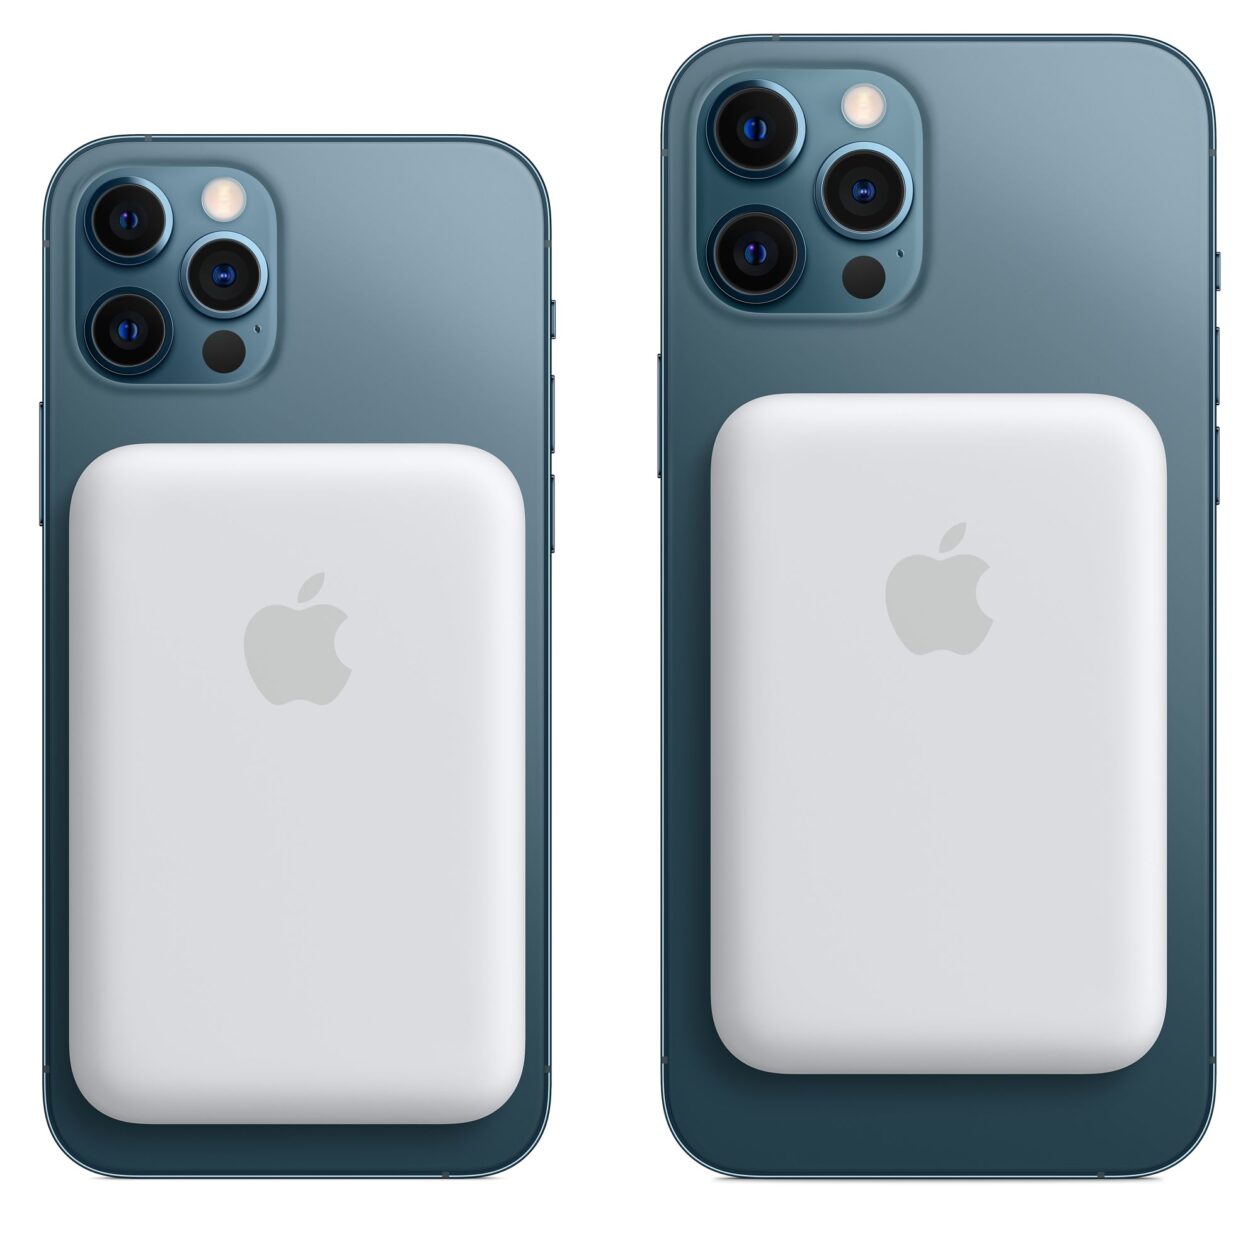 Bateria MagSafe em iPhones 12 Pro e 12 Pro Max azul-pacífico